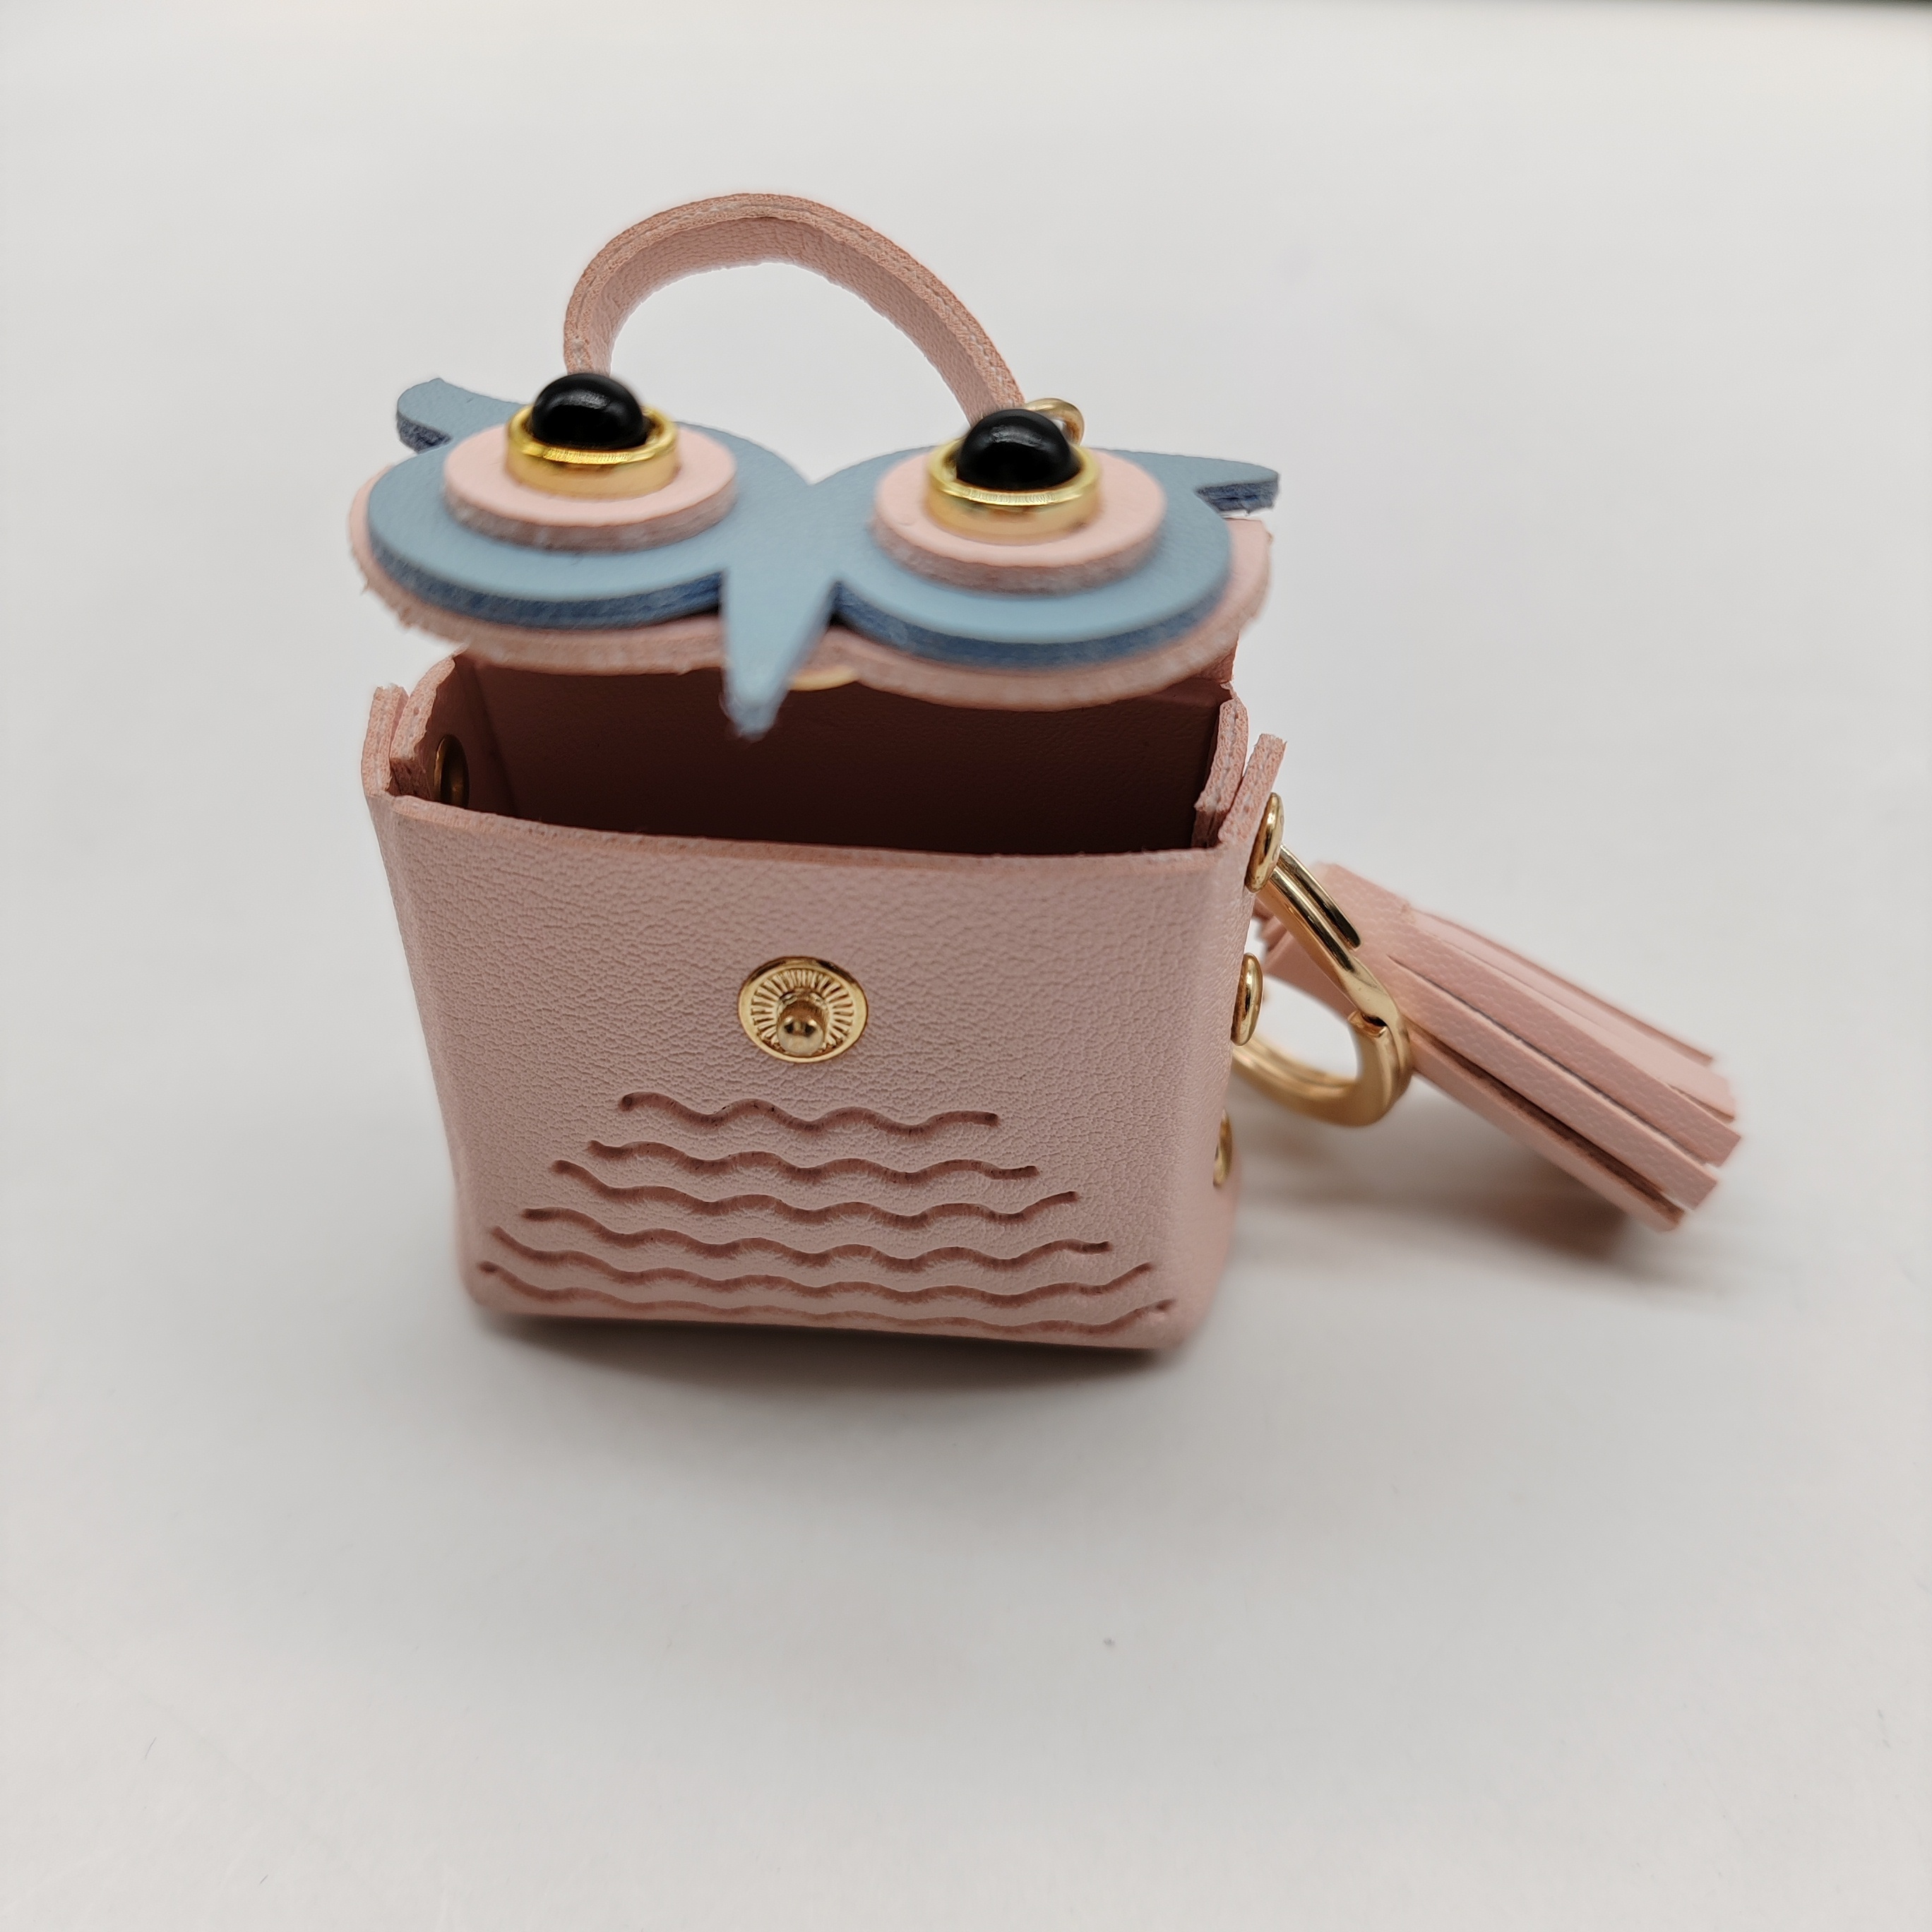 LV Owl Bagcharm /Keychain/ Coin purse, Women's Fashion, Bags